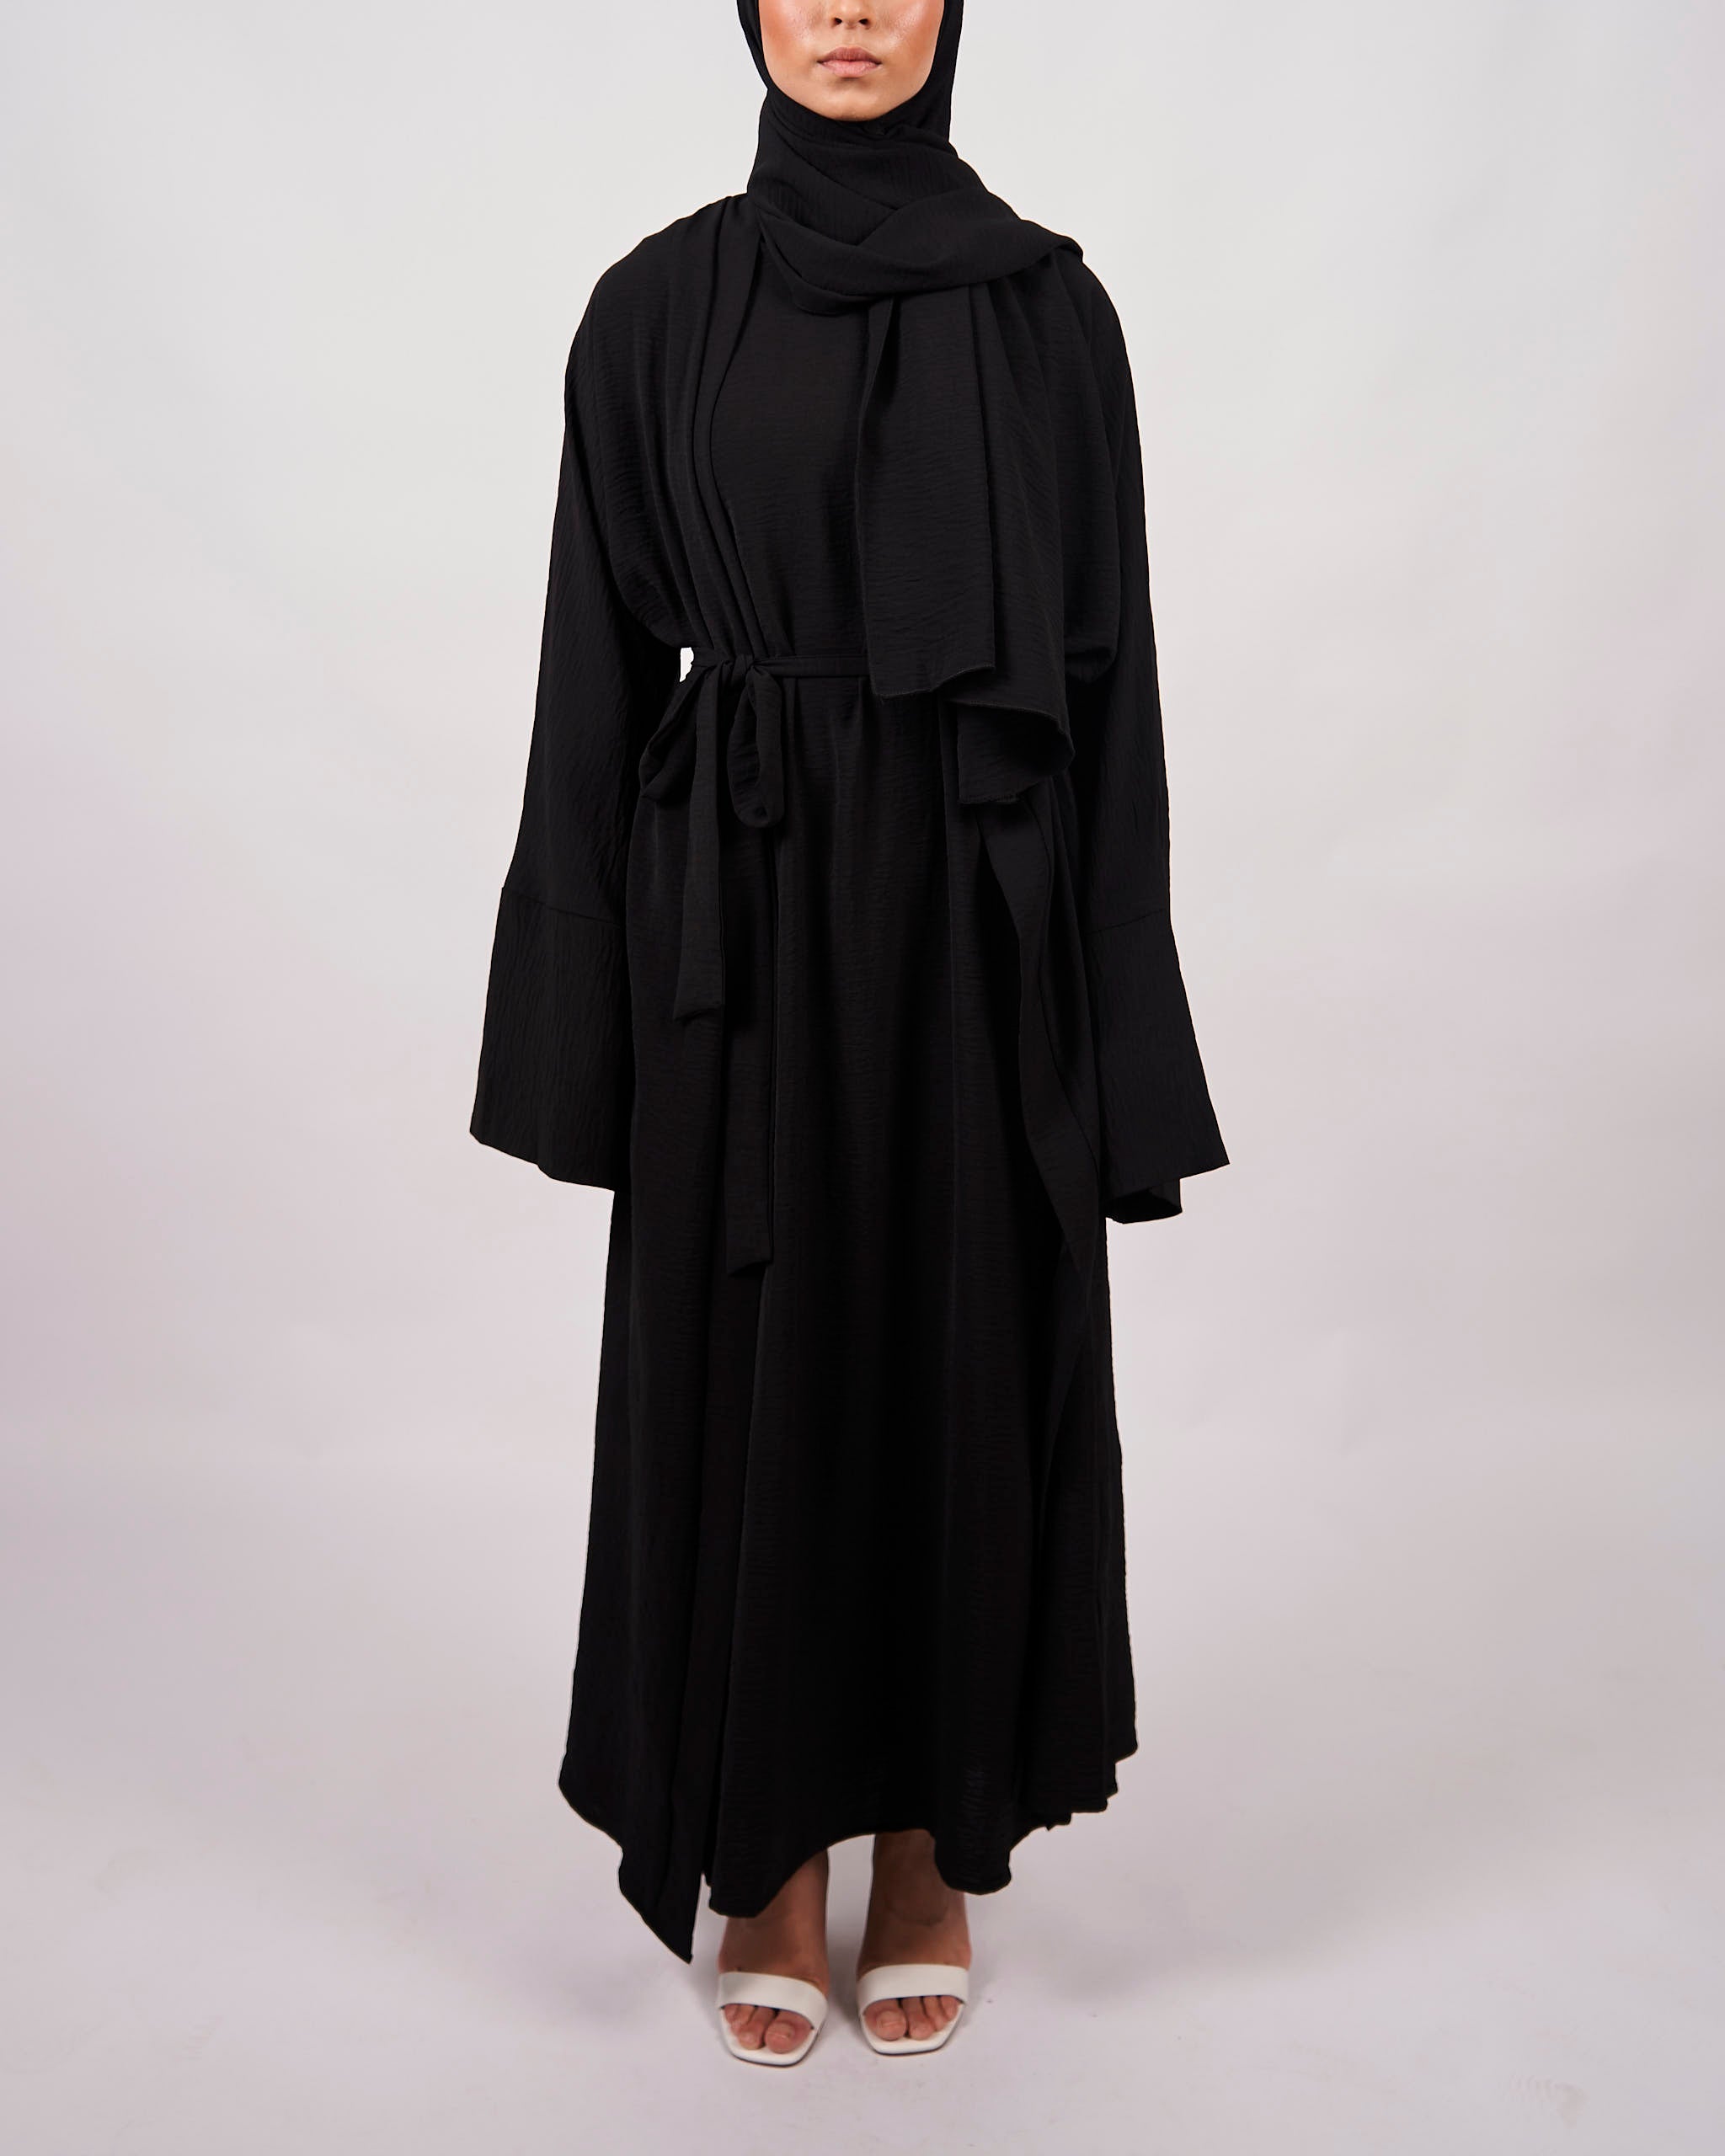 3 Piece Abaya Set - Black - Open Abaya - Fajr Noor